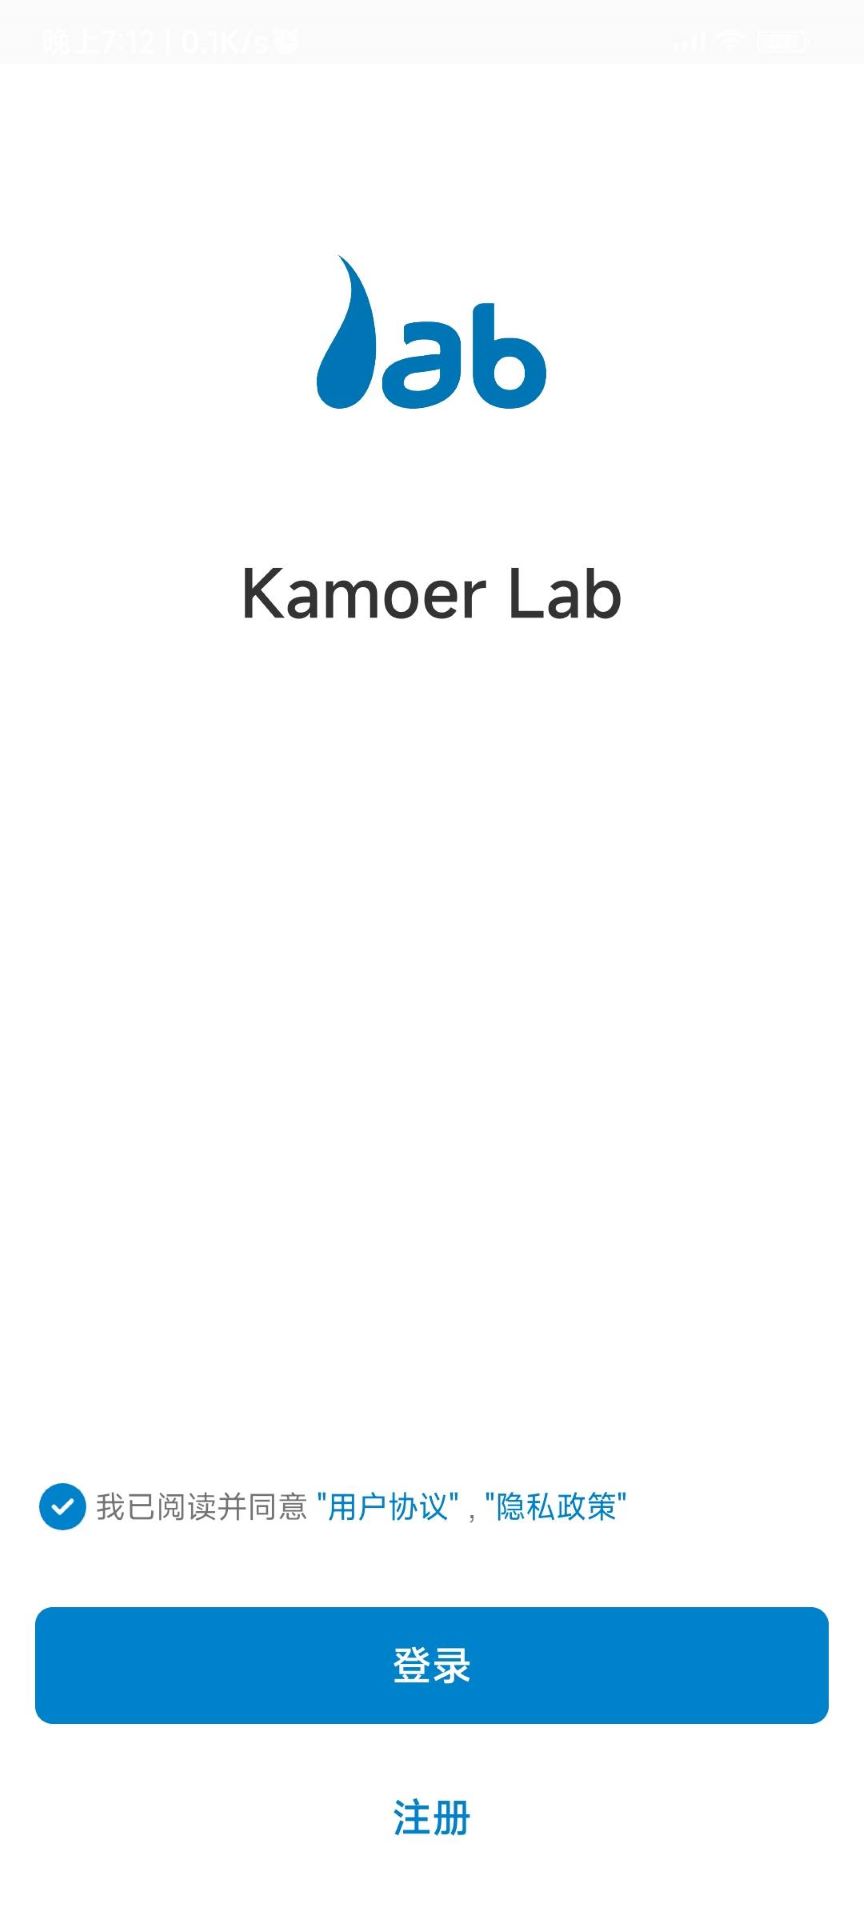 Kamoer Lab